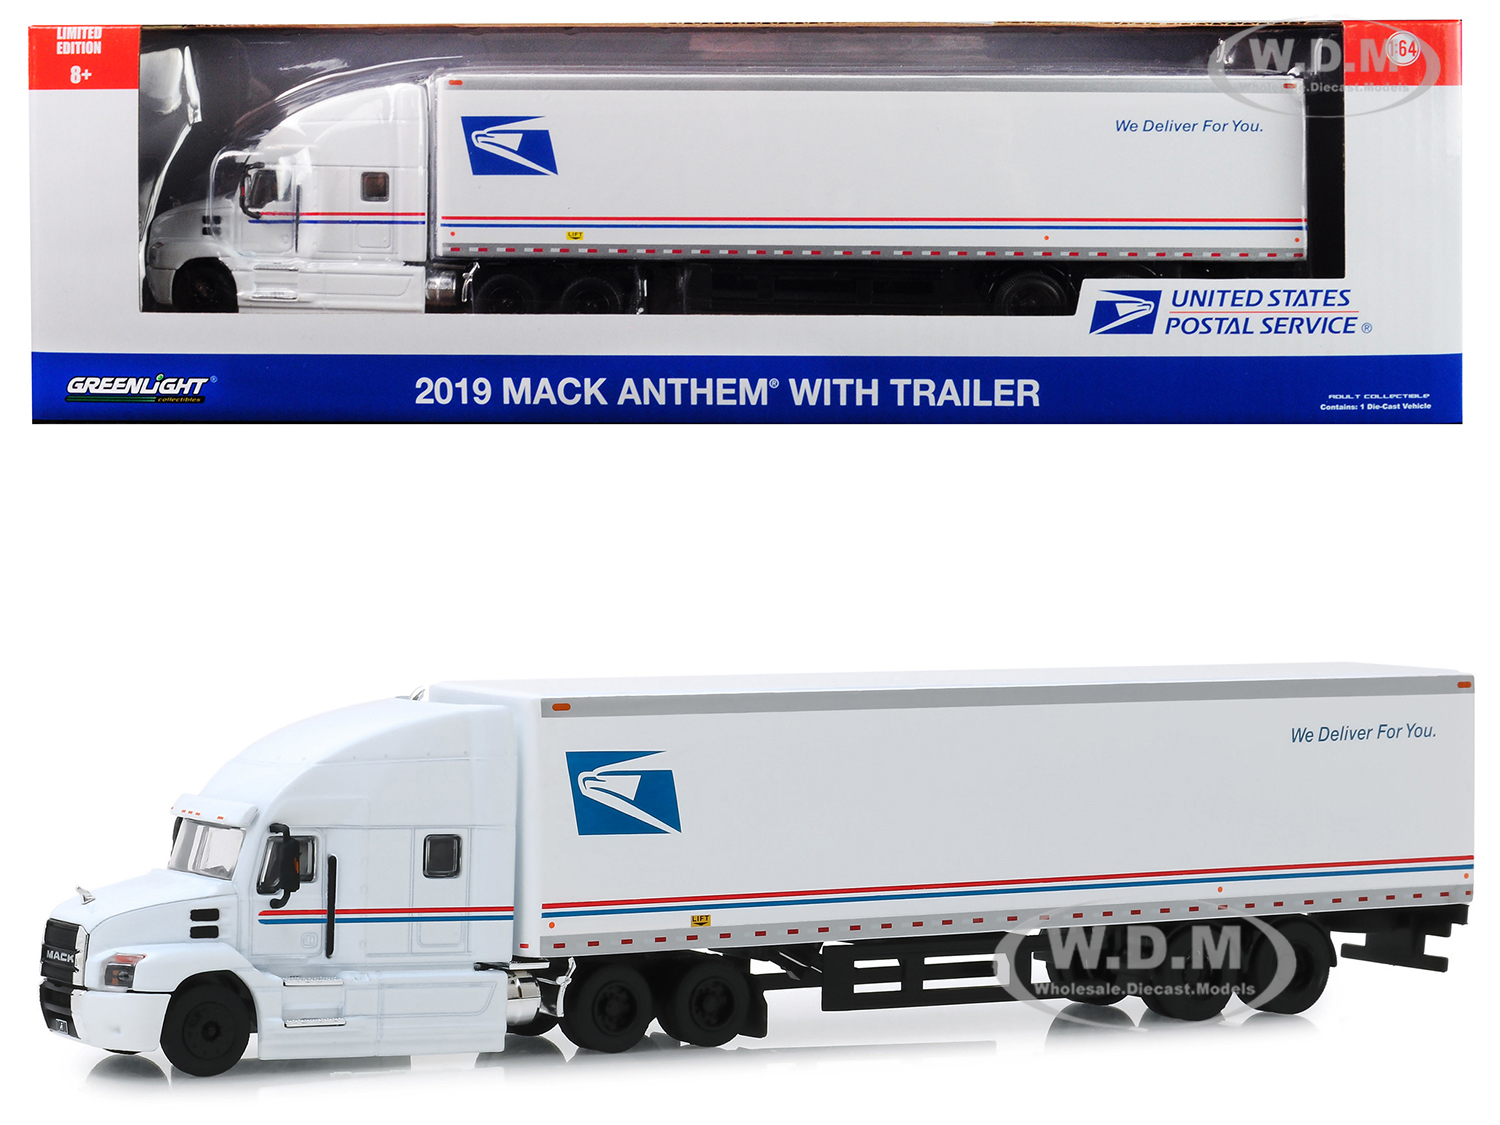 2019 Mack Anthem 18 Wheeler Tractor-Trailer "USPS" (United States Postal Service) "We Deliver For You" 1/64 Diecast Model by Greenlight